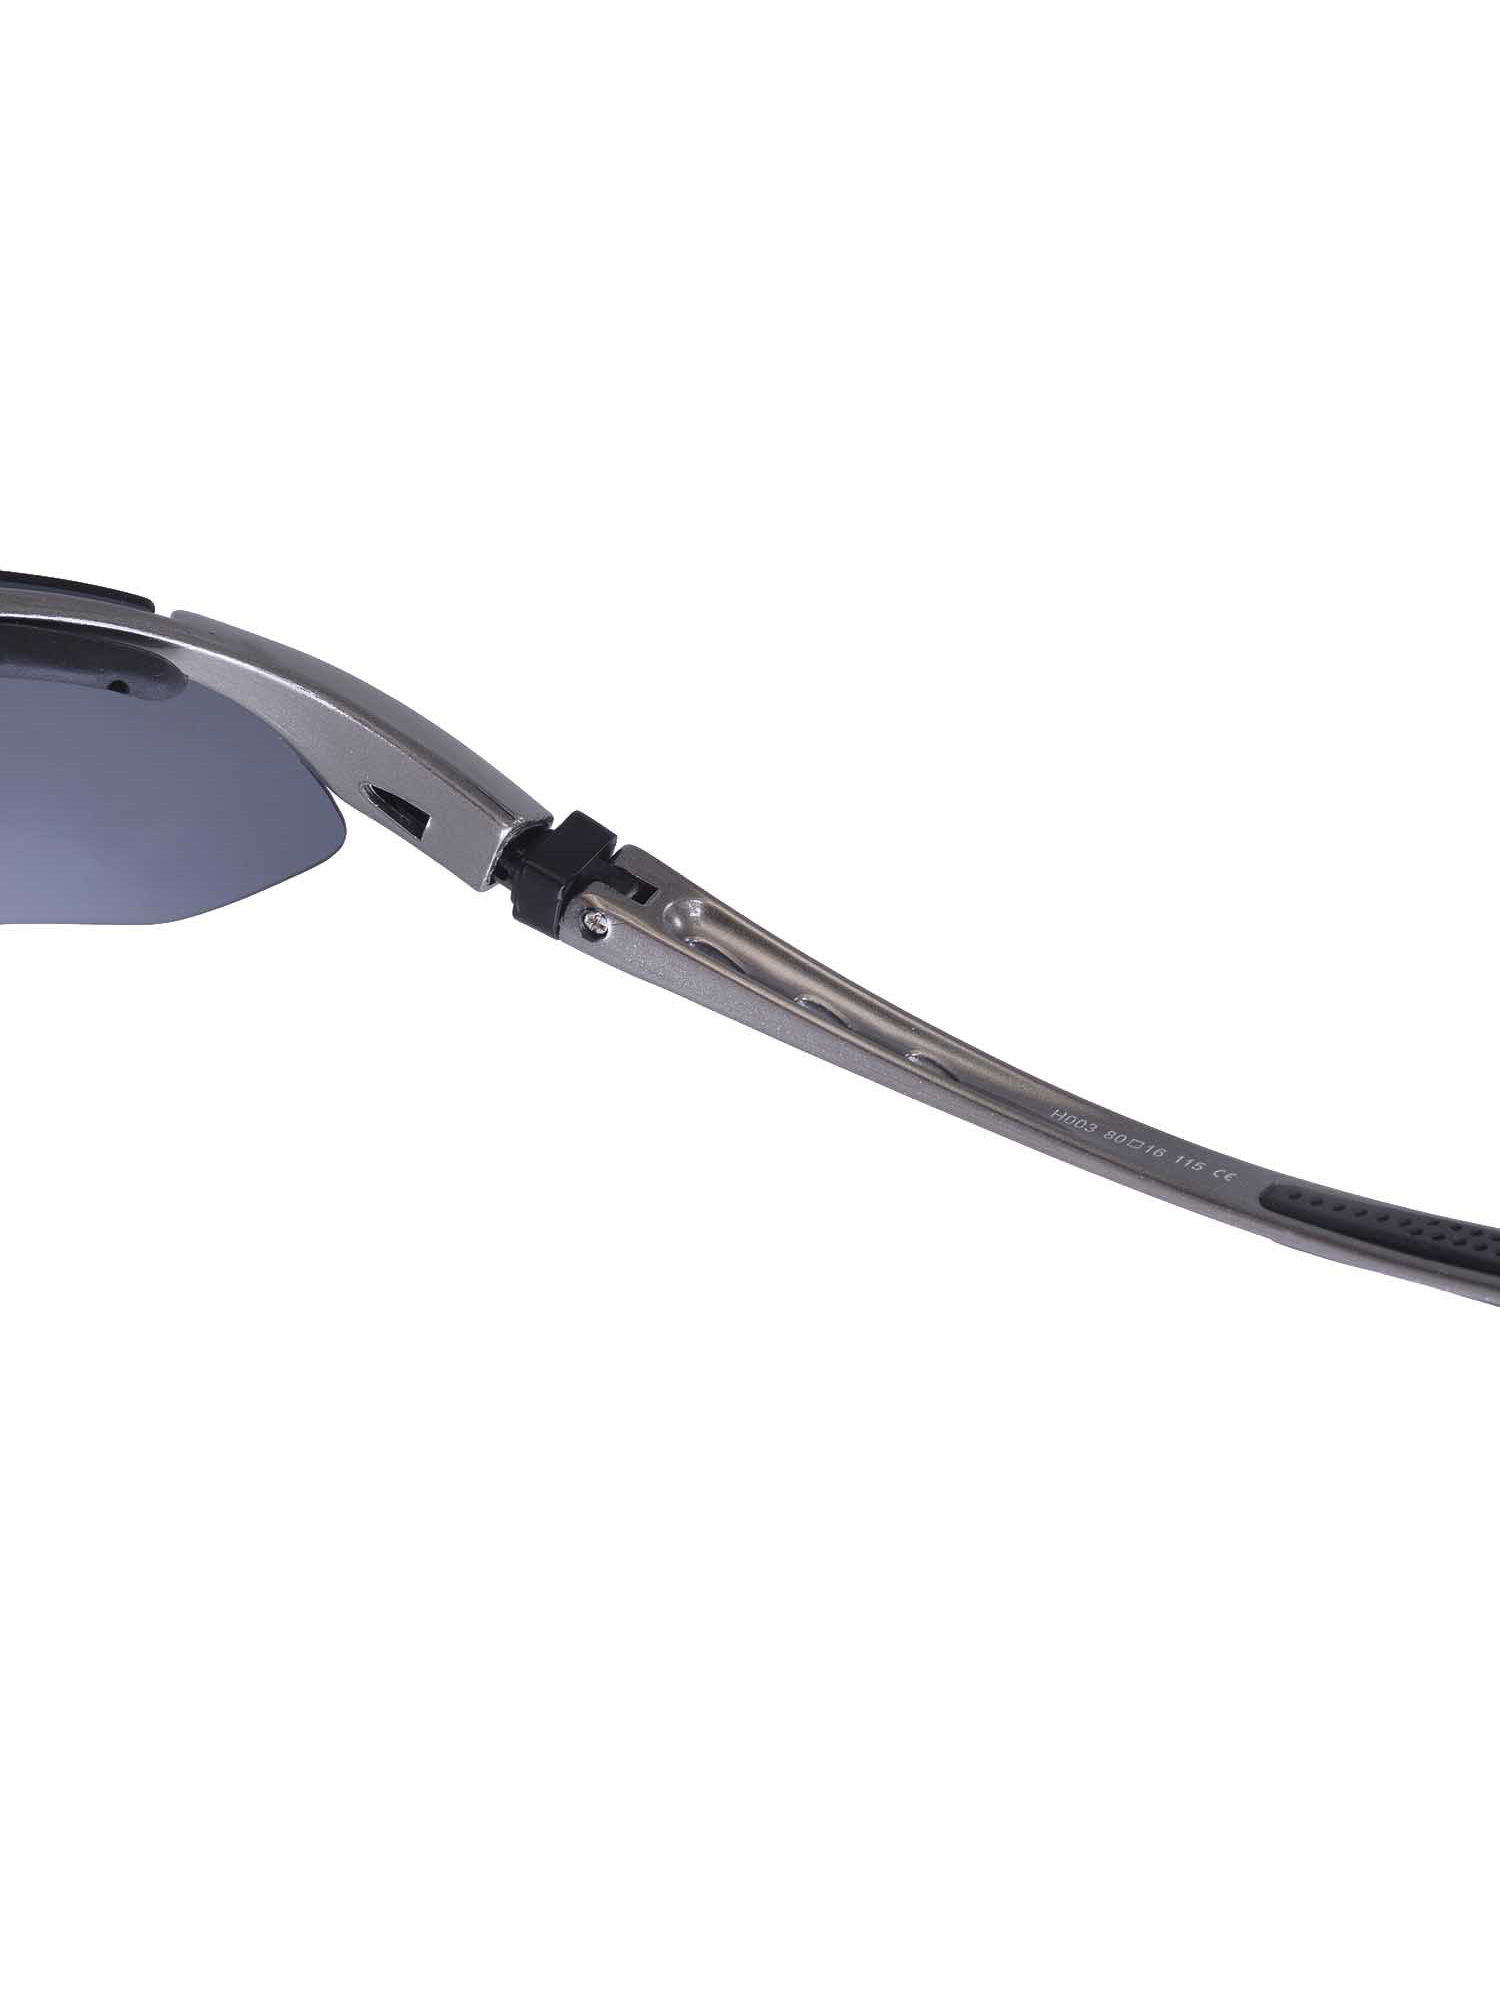 Walleva Polarized Sports Sunglasses With TR90 Frame - Multiple Options Available (Titanium Mirror Coated - Polarized) - image 5 of 8